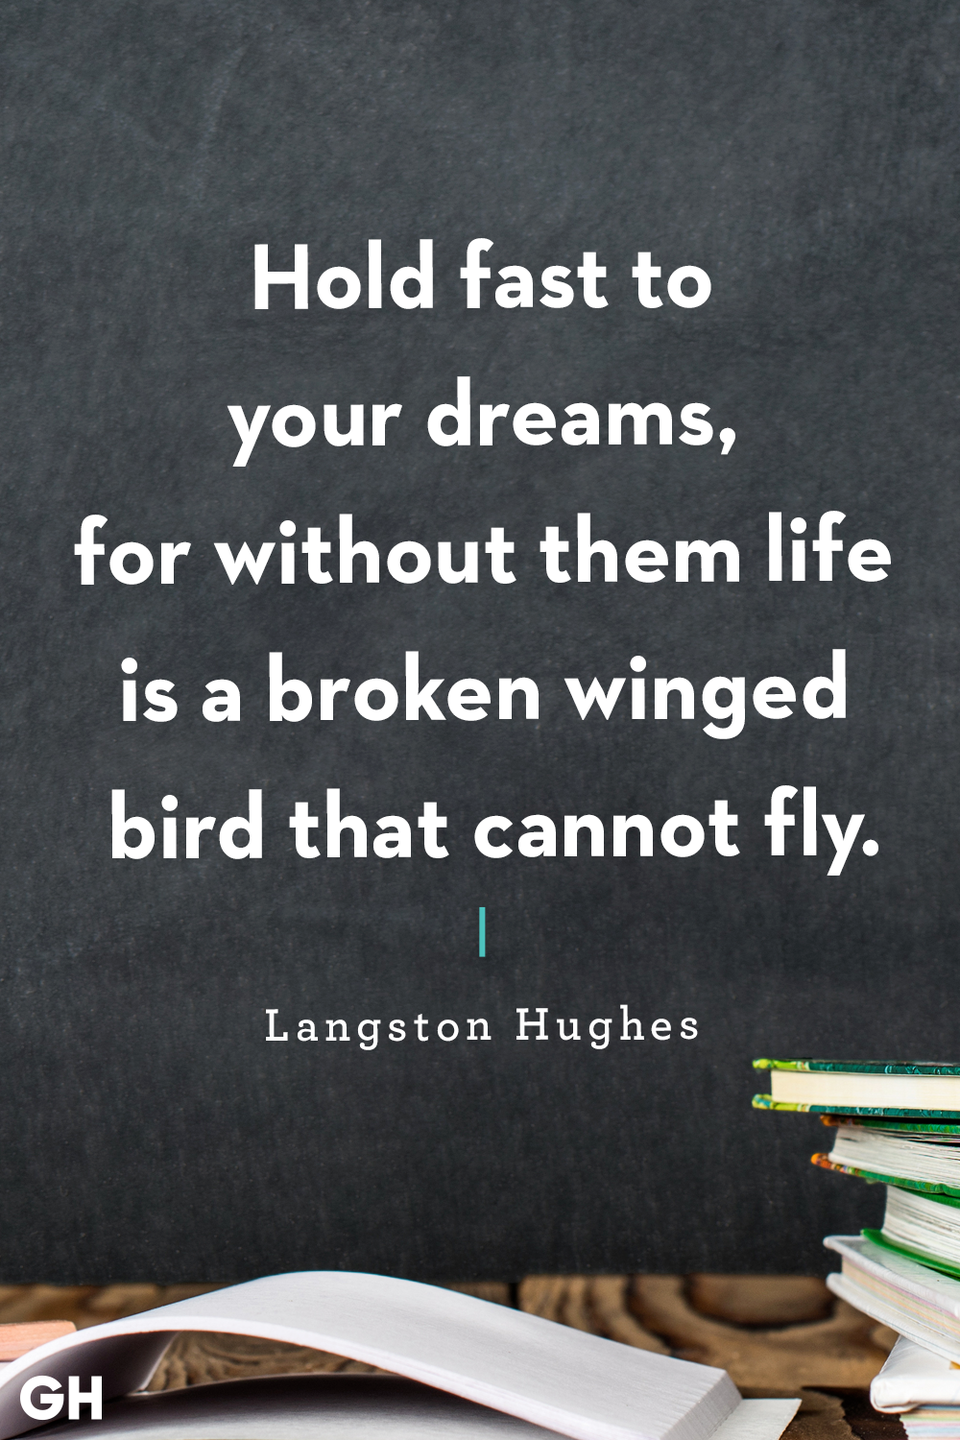 8) Langston Hughes